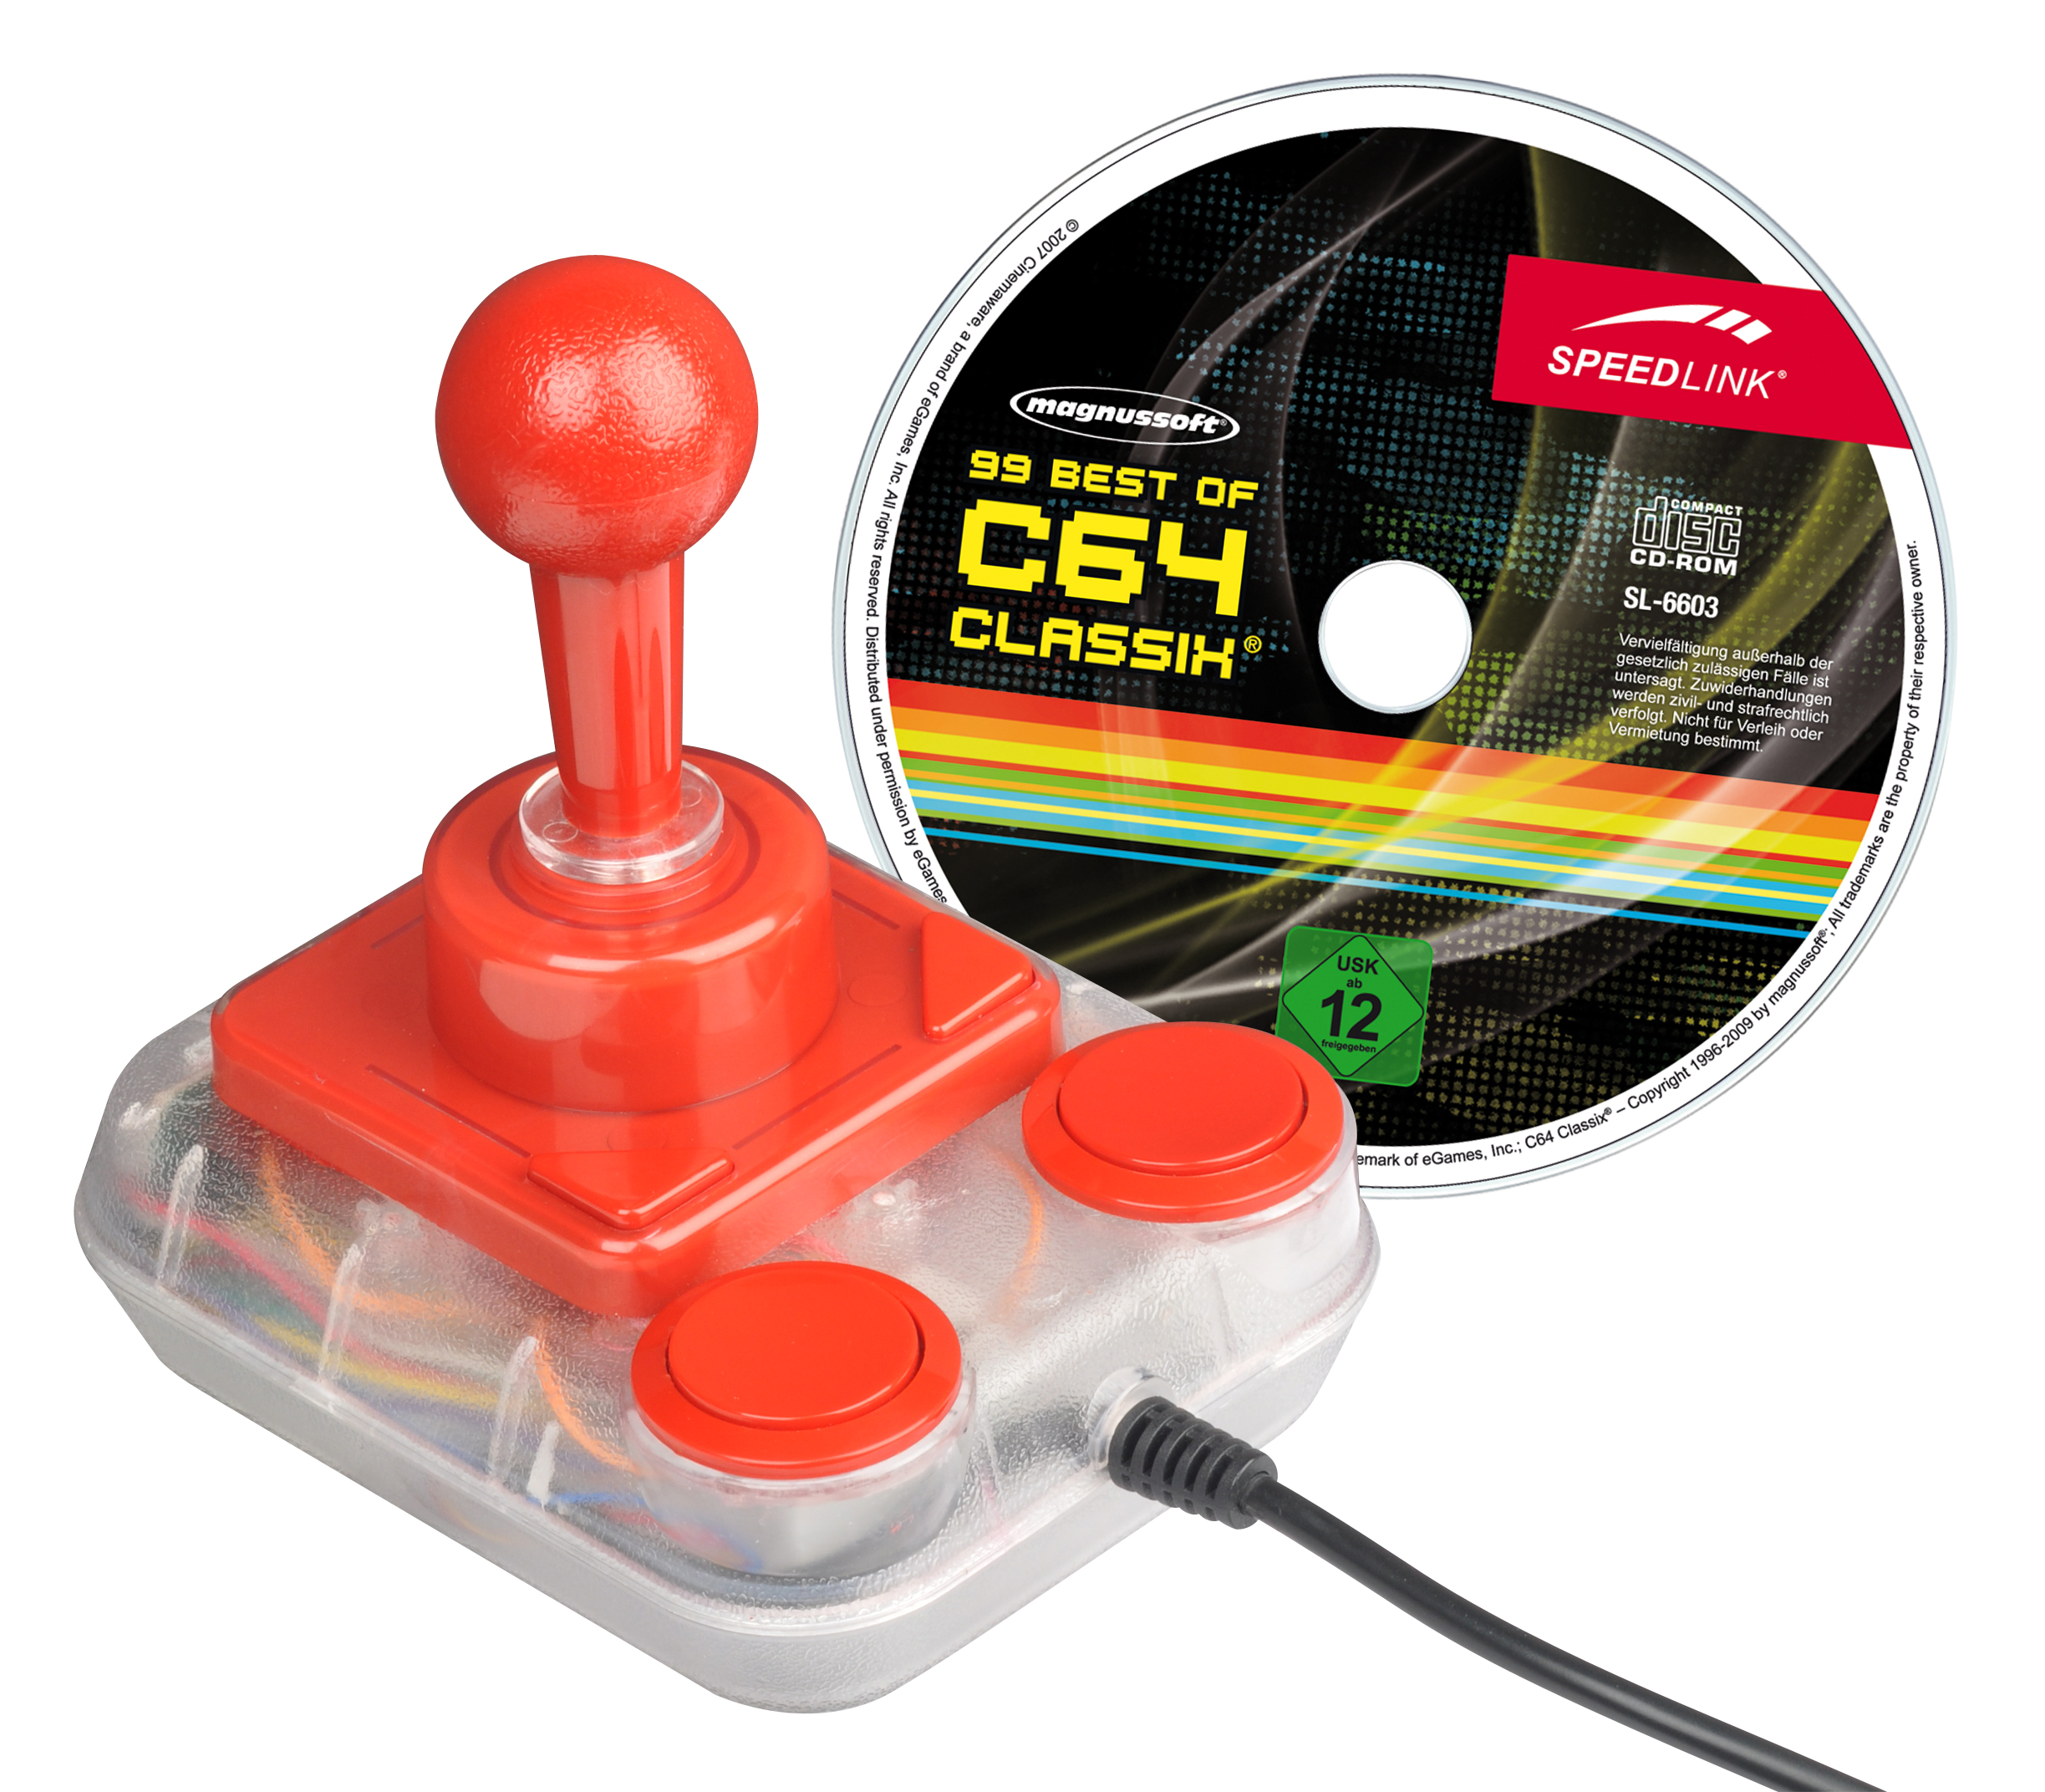 . rol inzet Competition Pro USB Joystick + '99 Best of C64 Classix®' Games Collection,  Jöllenbeck GmbH, Press release - PresseBox